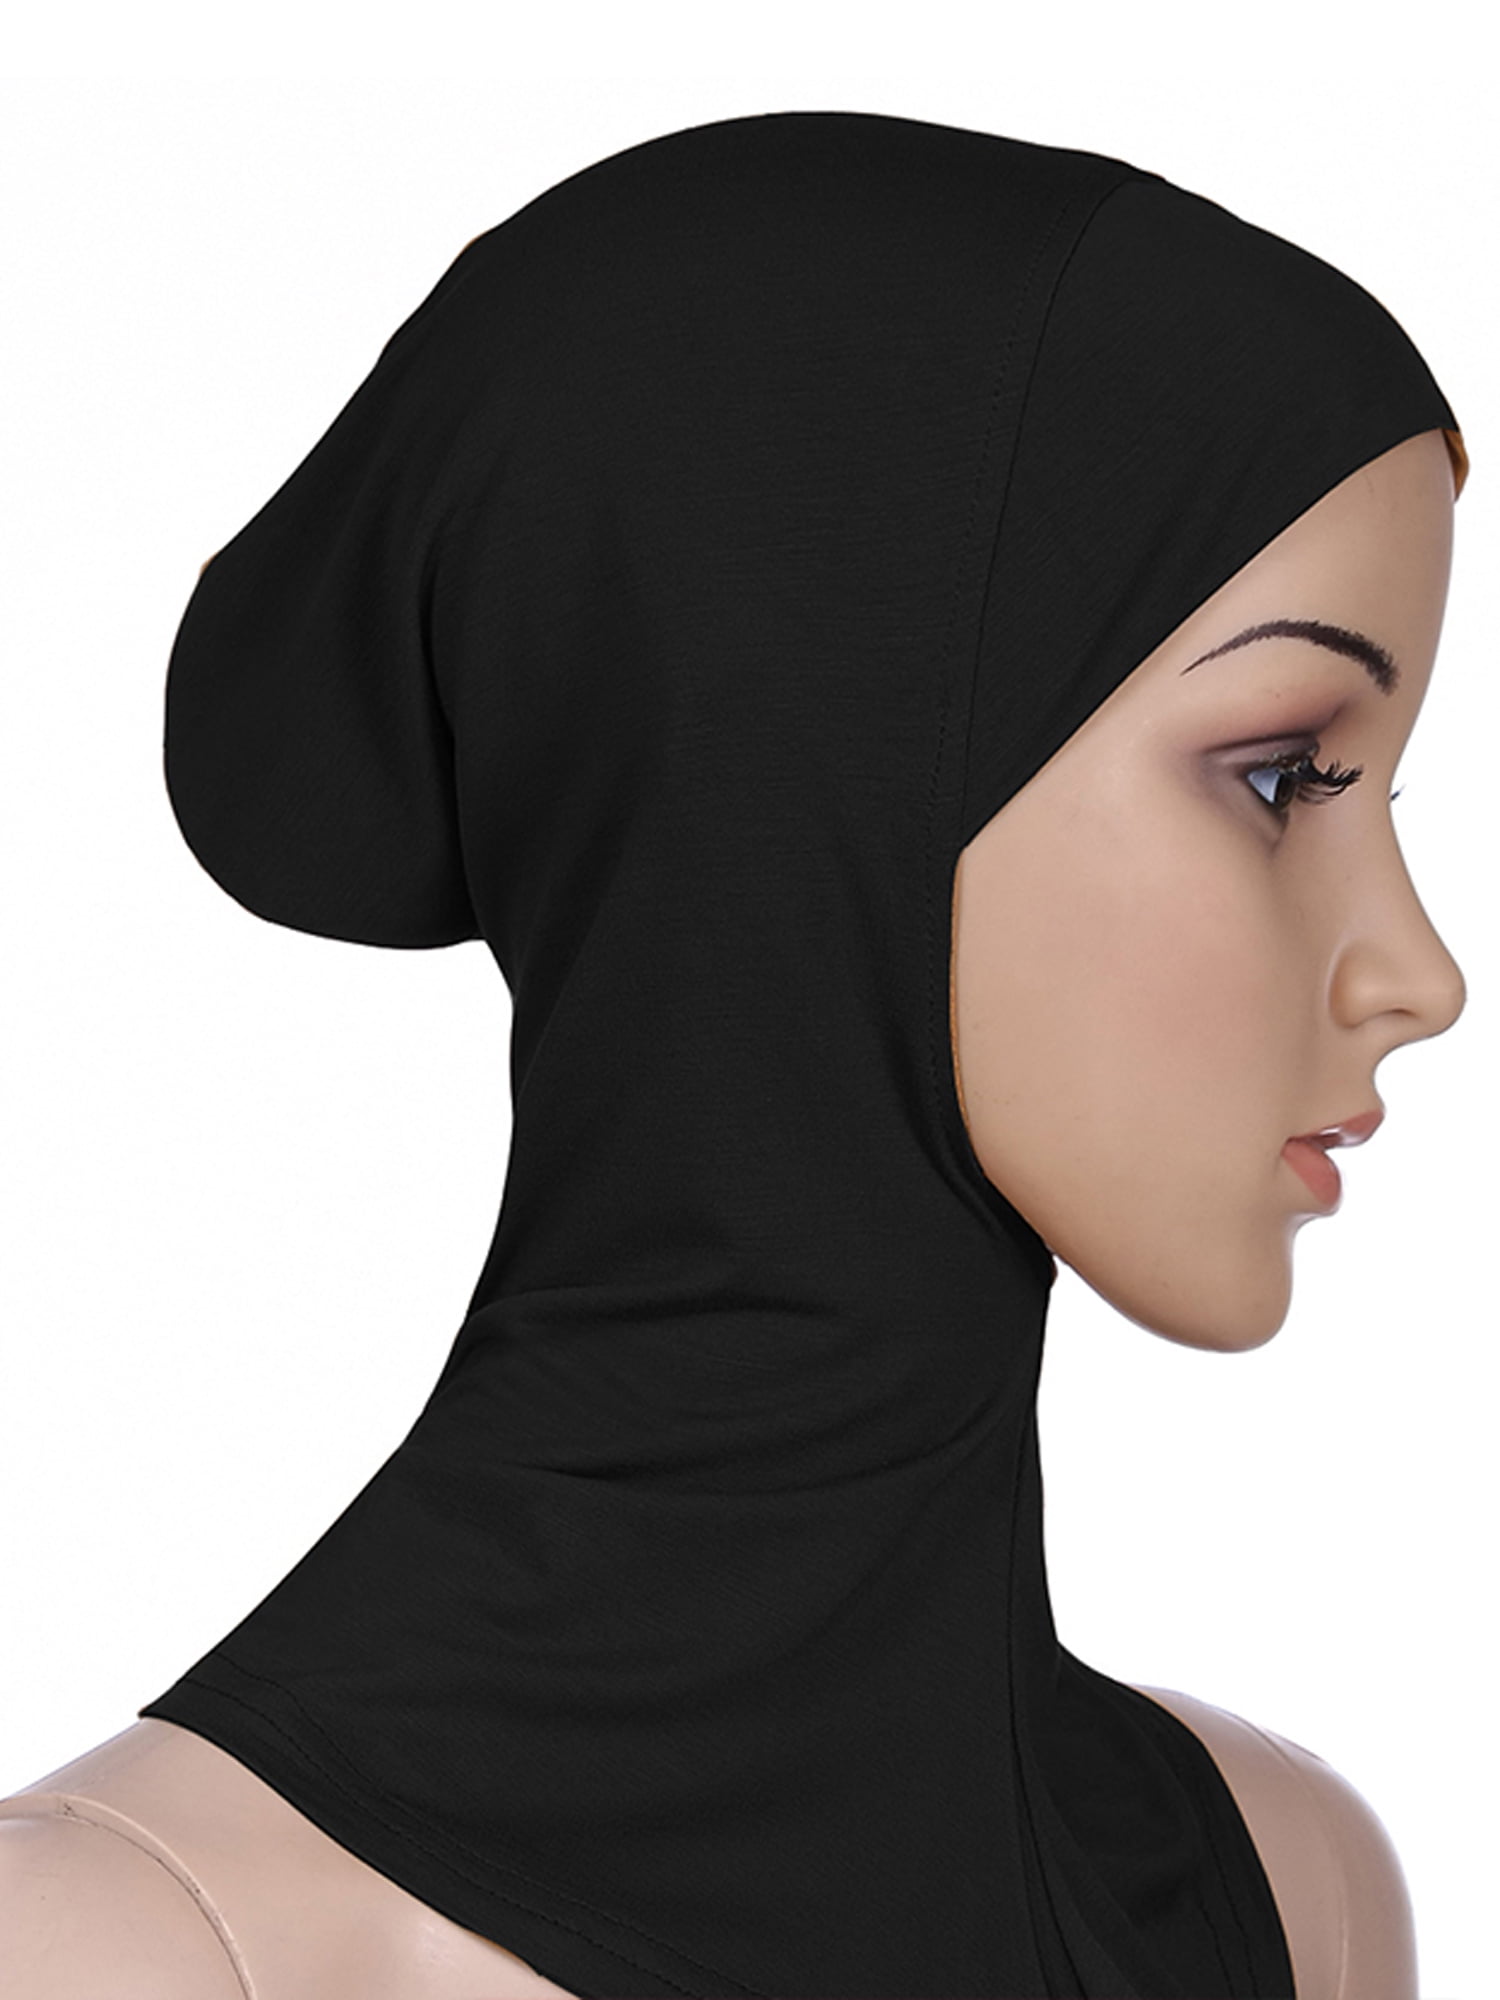 New Muslim Hat Womens Scarf Hat Cap Bone Bonnet Ninja Hijab Islamic Neck Cover 